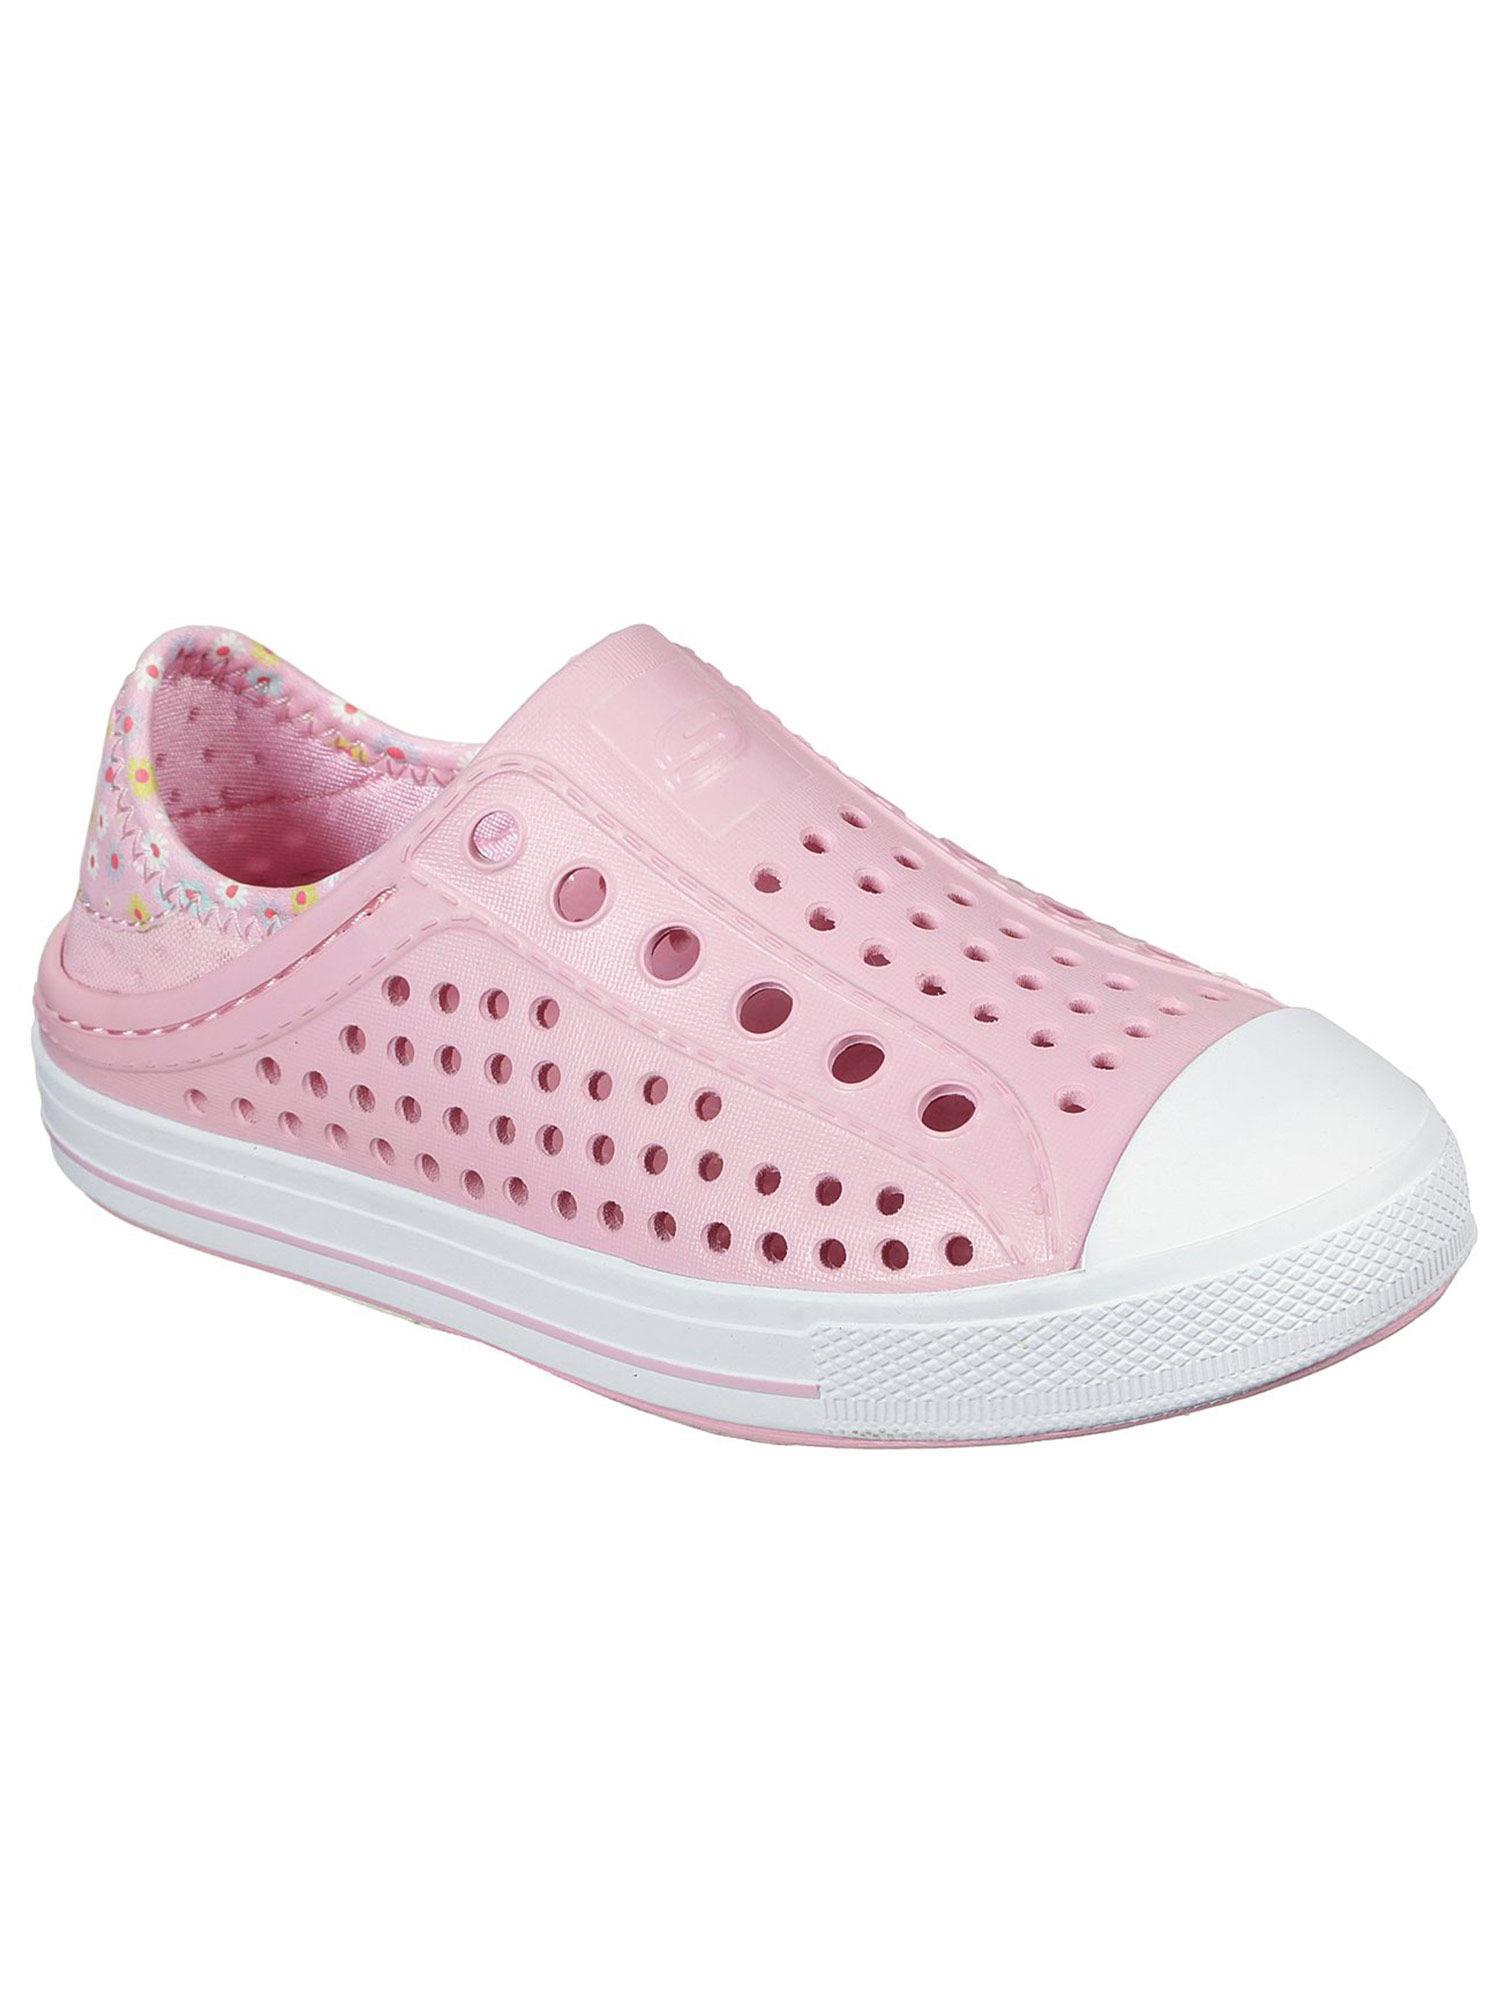 Guzman Steps - Sun Princess Pink Casual Shoes